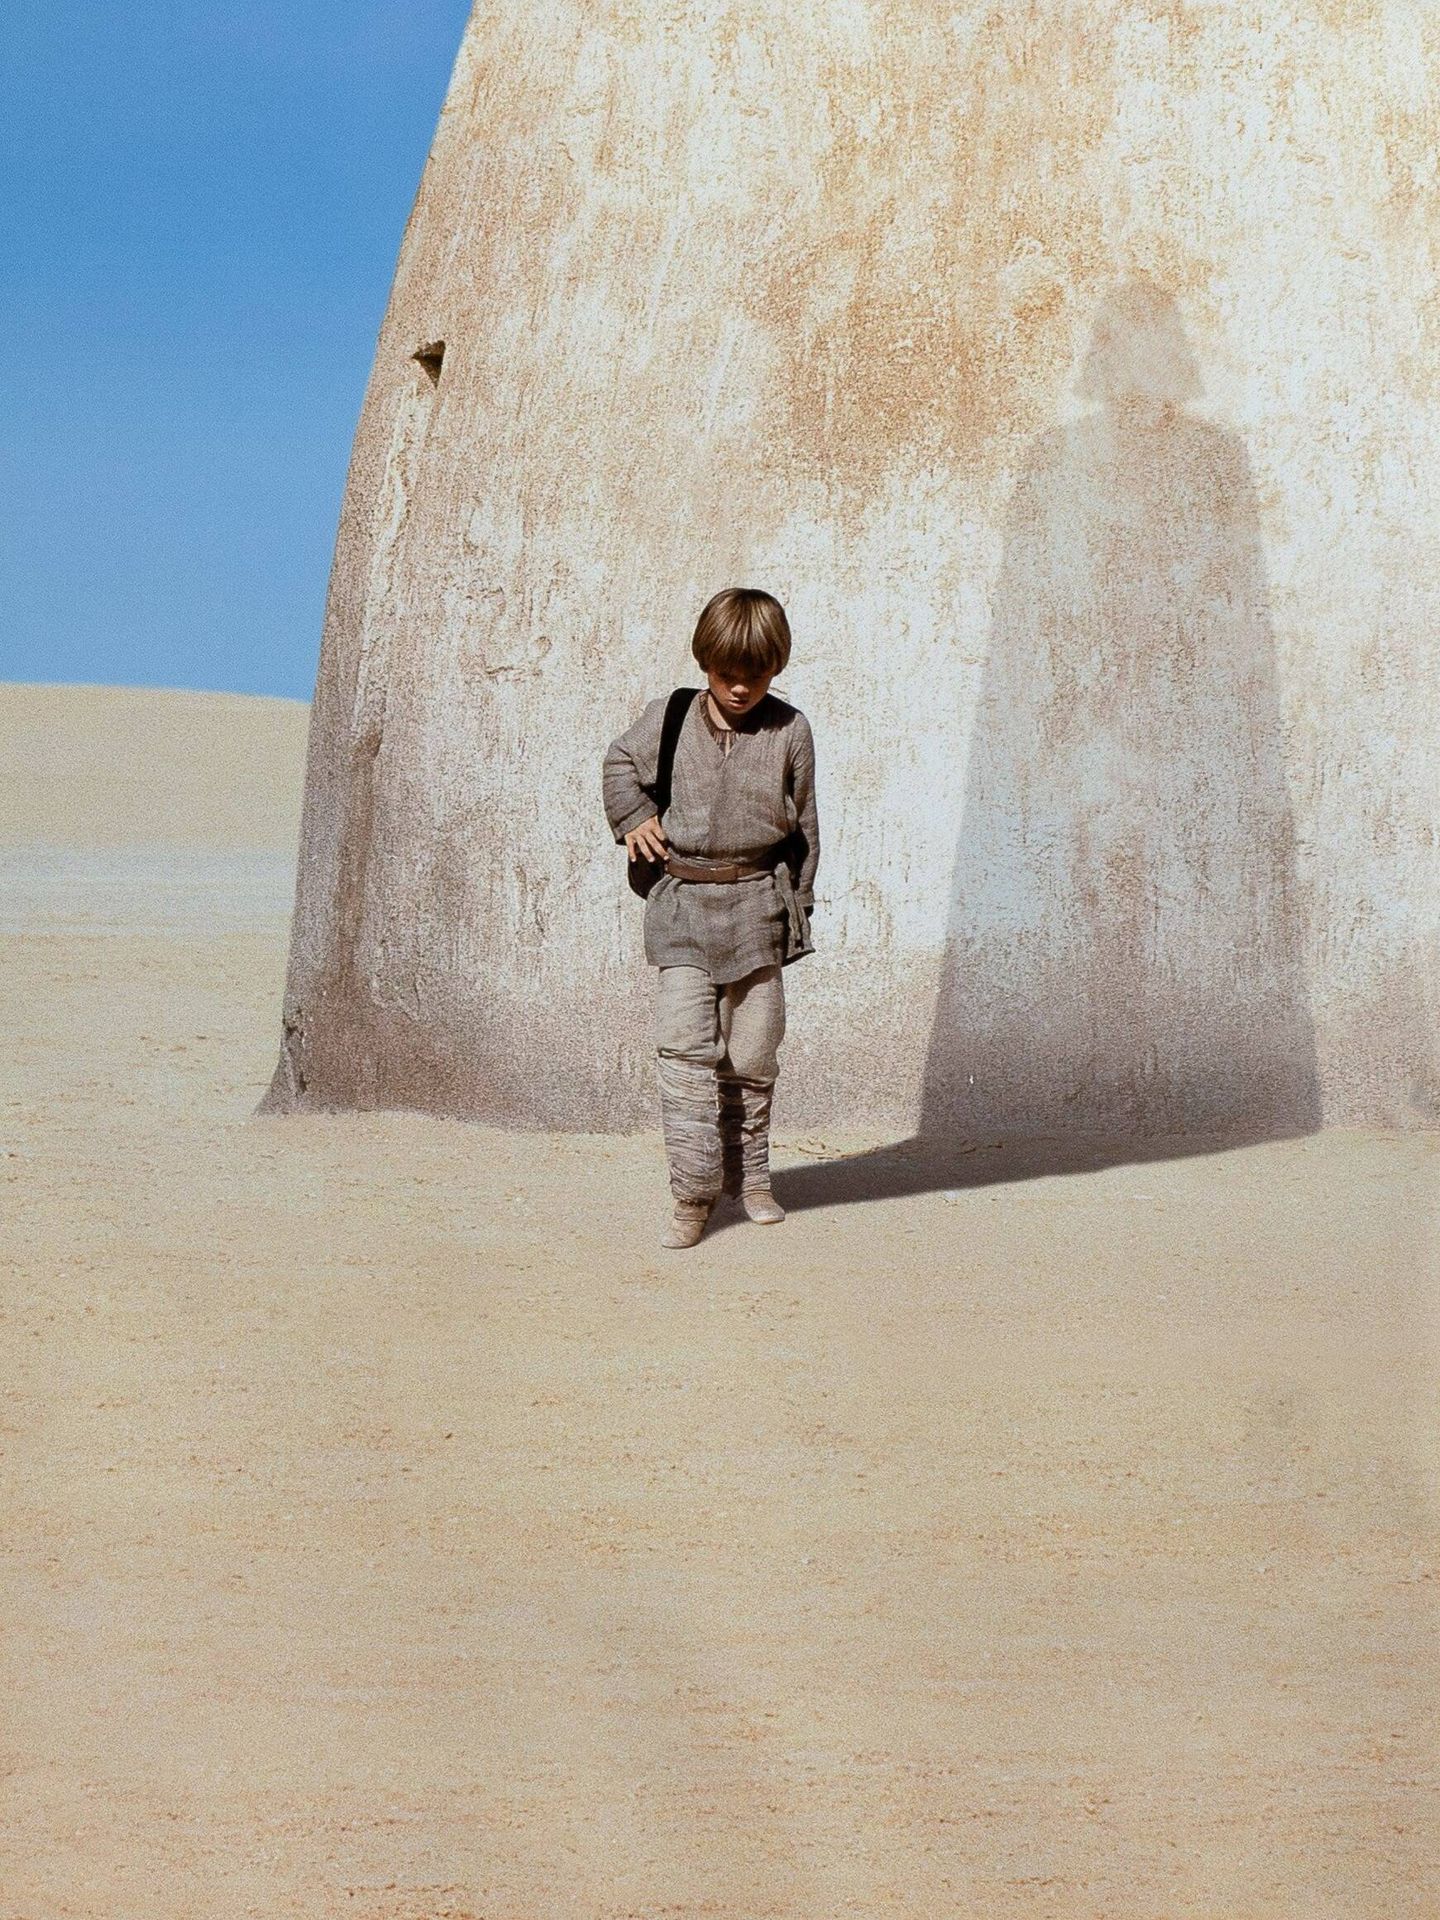 Star Wars: Episodio I - La amenaza fantasma. (1999 © Lucasfilm)